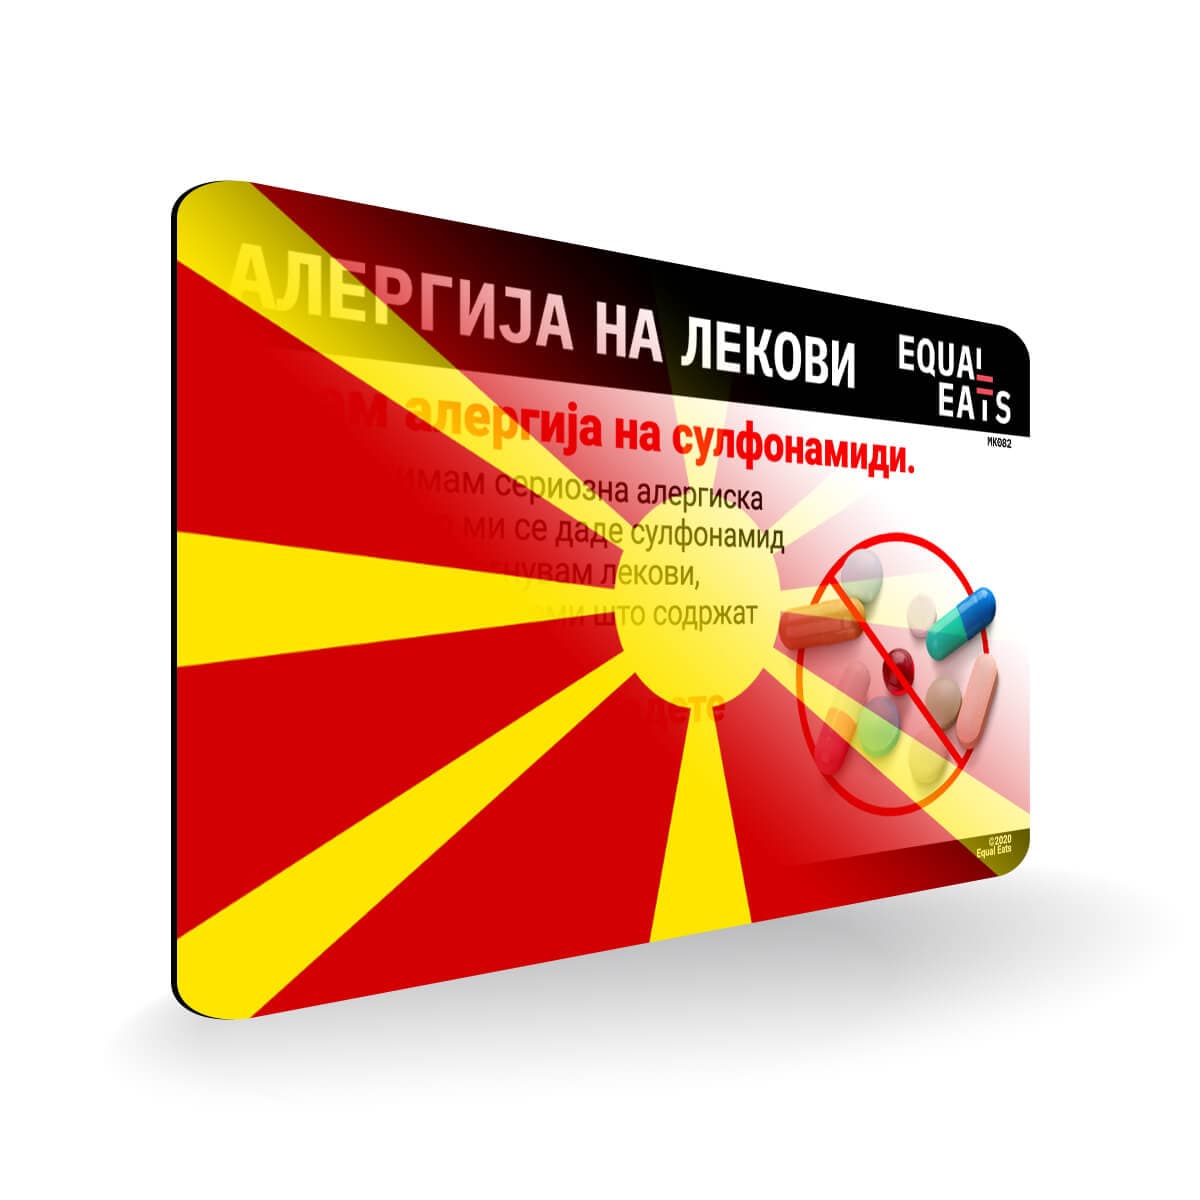 Sulfa Allergy in Macedonian. Sulfa Medicine Allergy Card for Macedonia